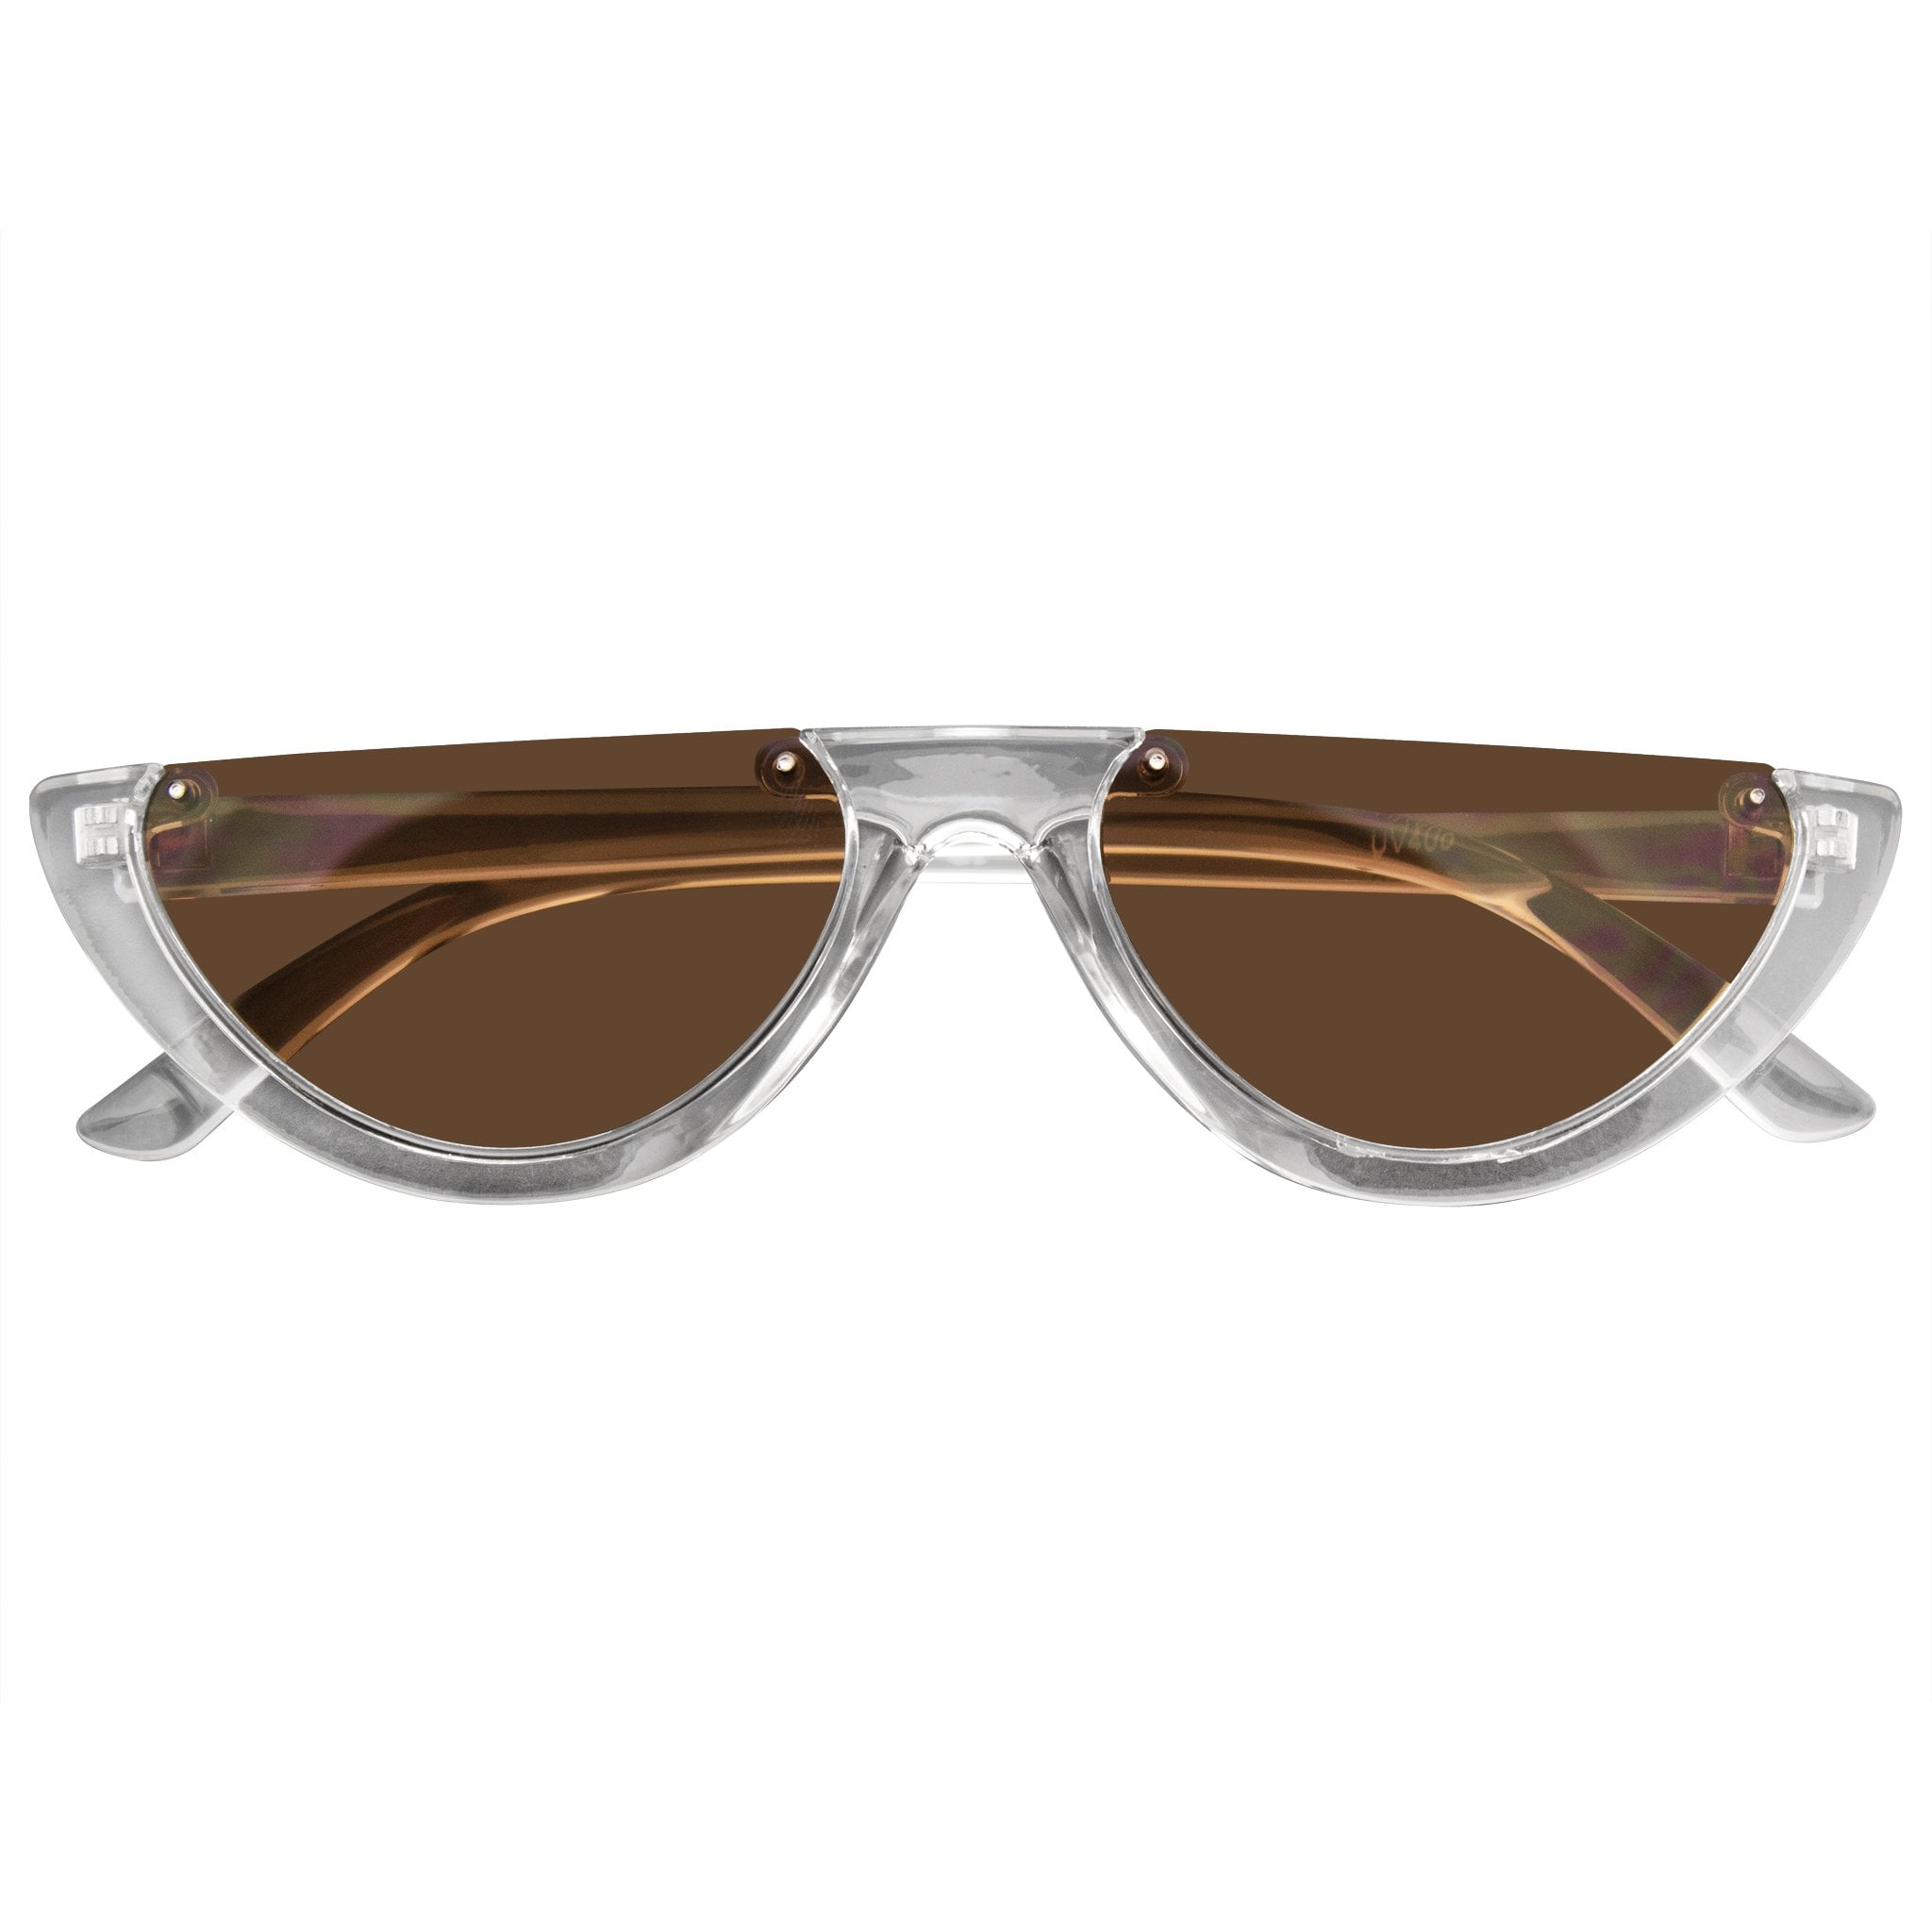 Clout Goggles Cat Eye Sunglasses Vintage Half Mod Style Retro Sunglasses -  